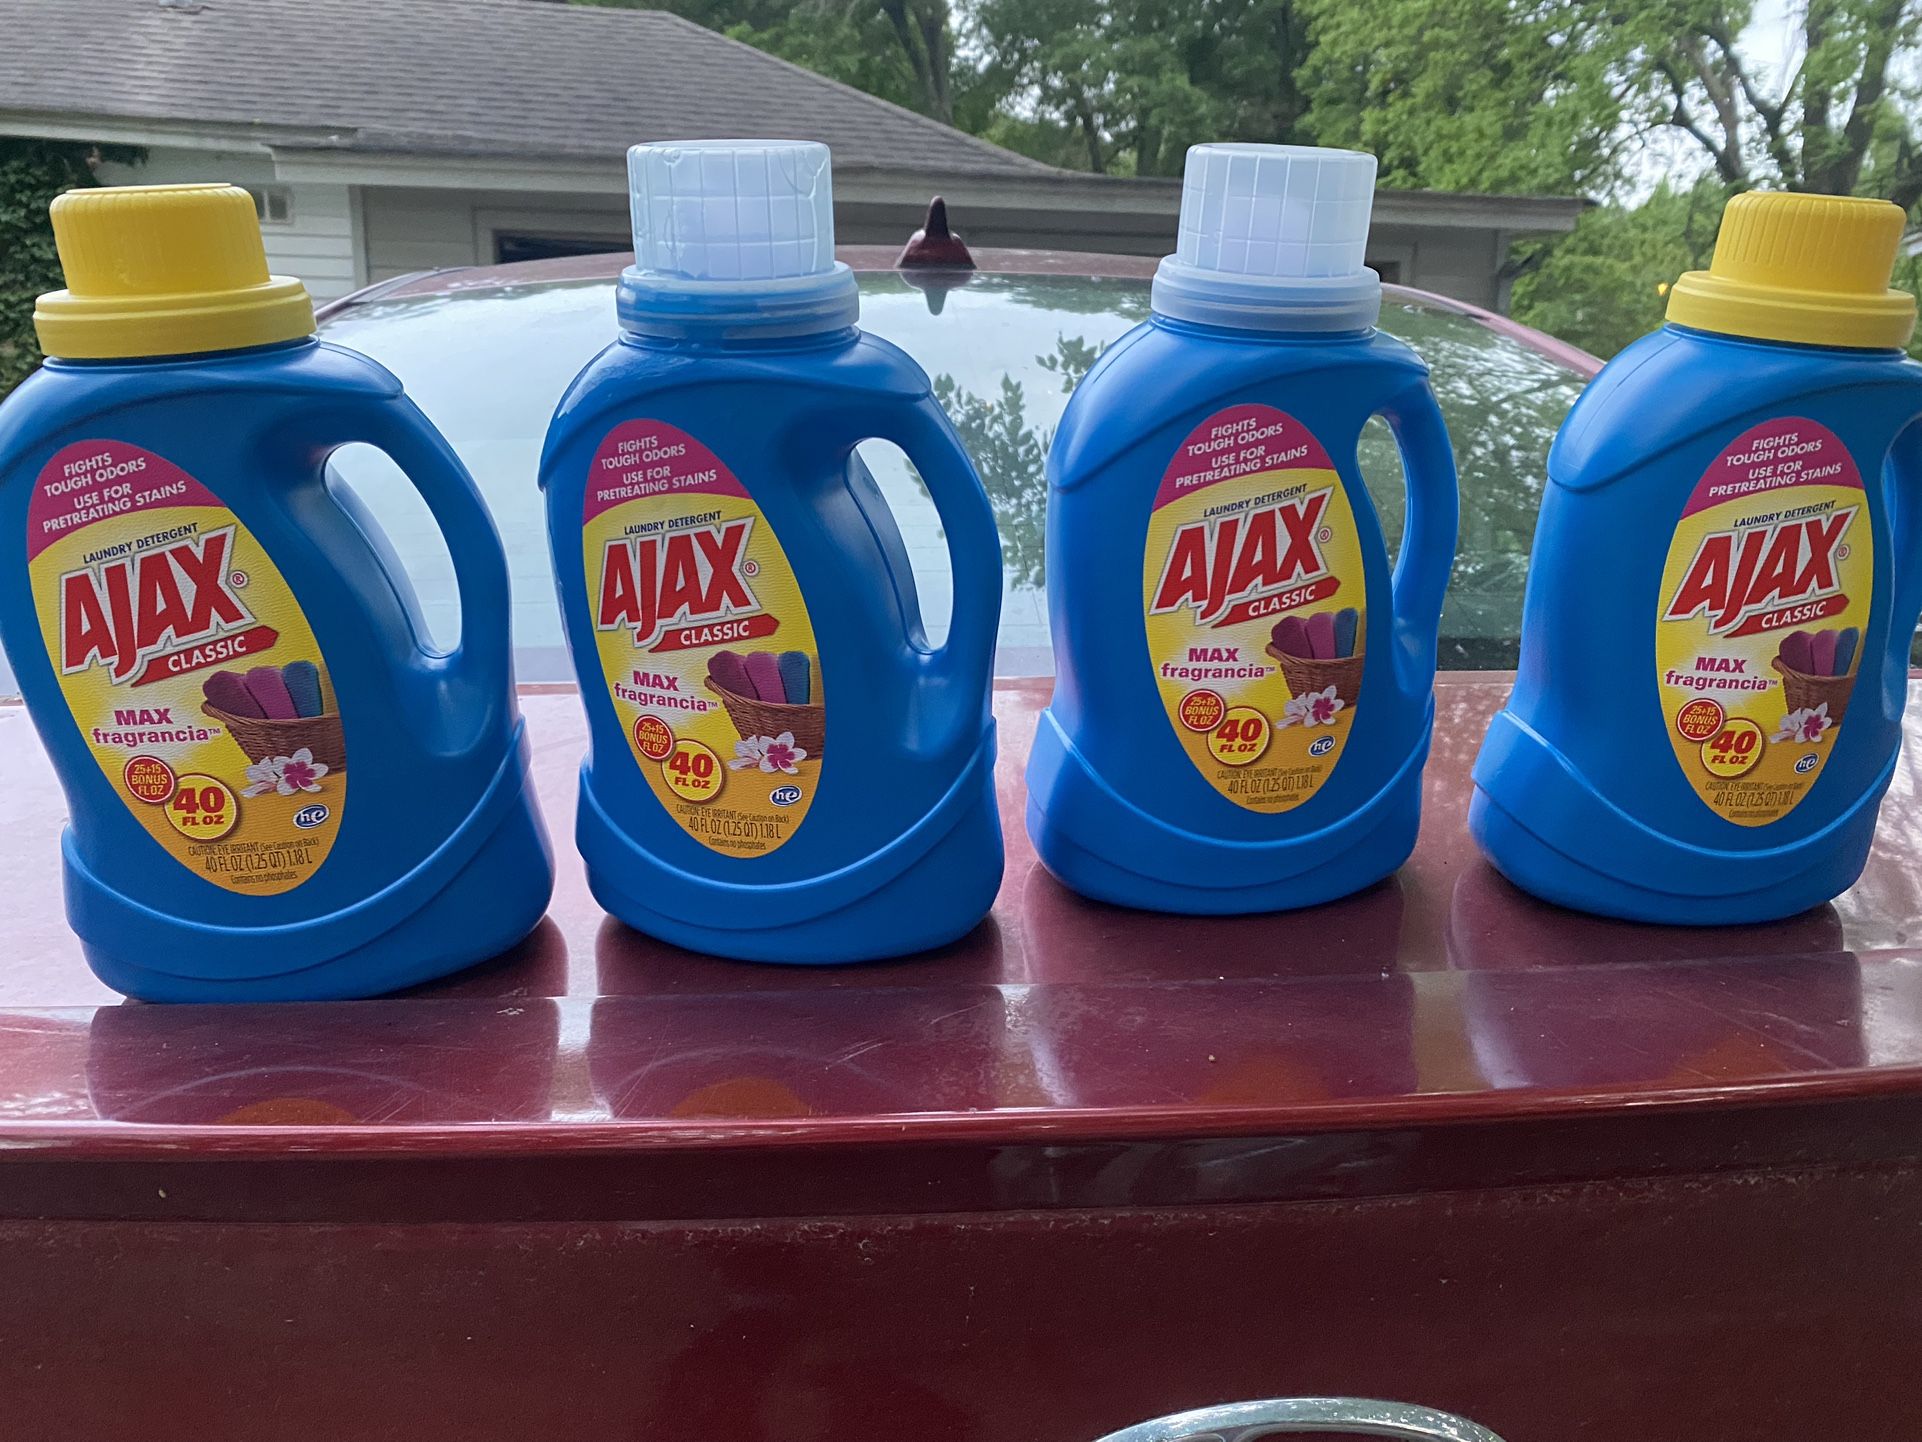 4x Ajax Liquid Max Fragrance Laundry Detergent, Original, 40 fl oz, 25 Loads